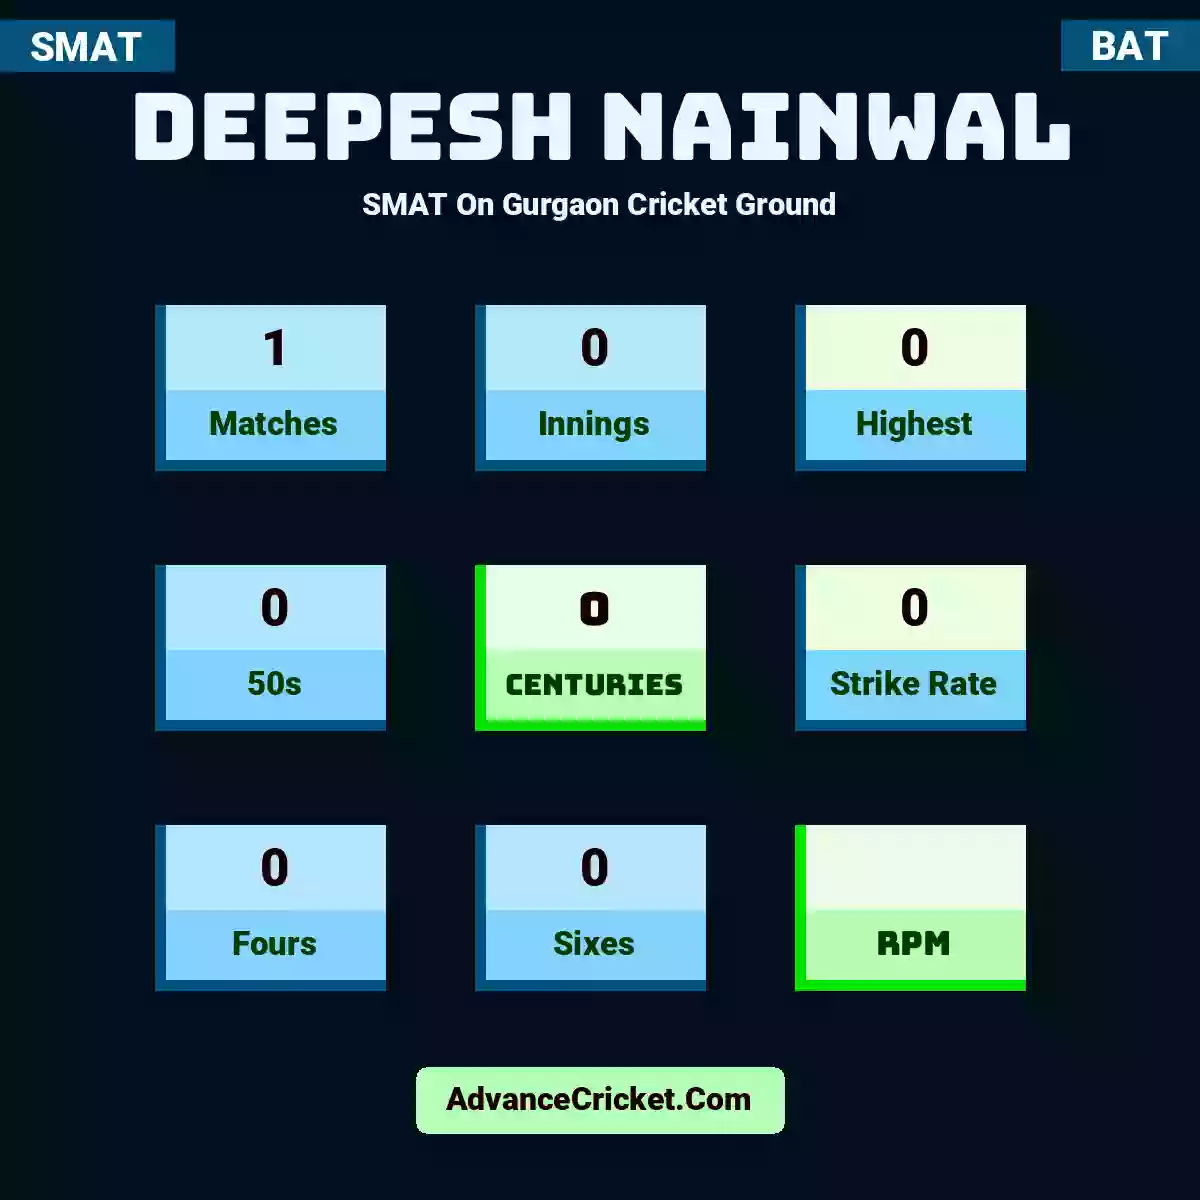 Deepesh Nainwal SMAT  On Gurgaon Cricket Ground, Deepesh Nainwal played 1 matches, scored 0 runs as highest, 0 half-centuries, and 0 centuries, with a strike rate of 0. D.Nainwal hit 0 fours and 0 sixes.